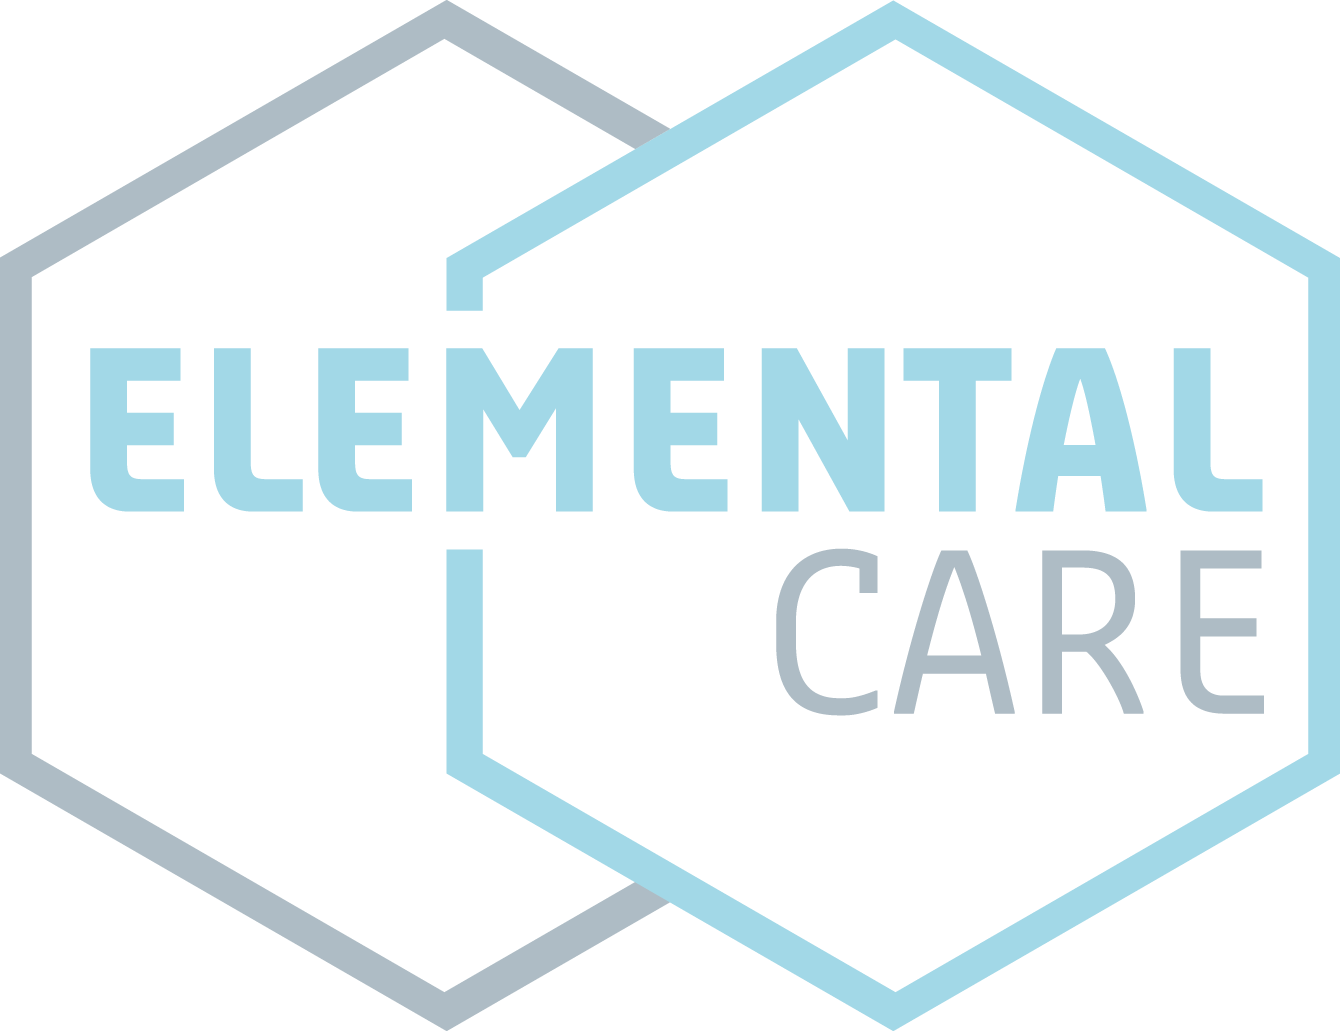 ElementalCare